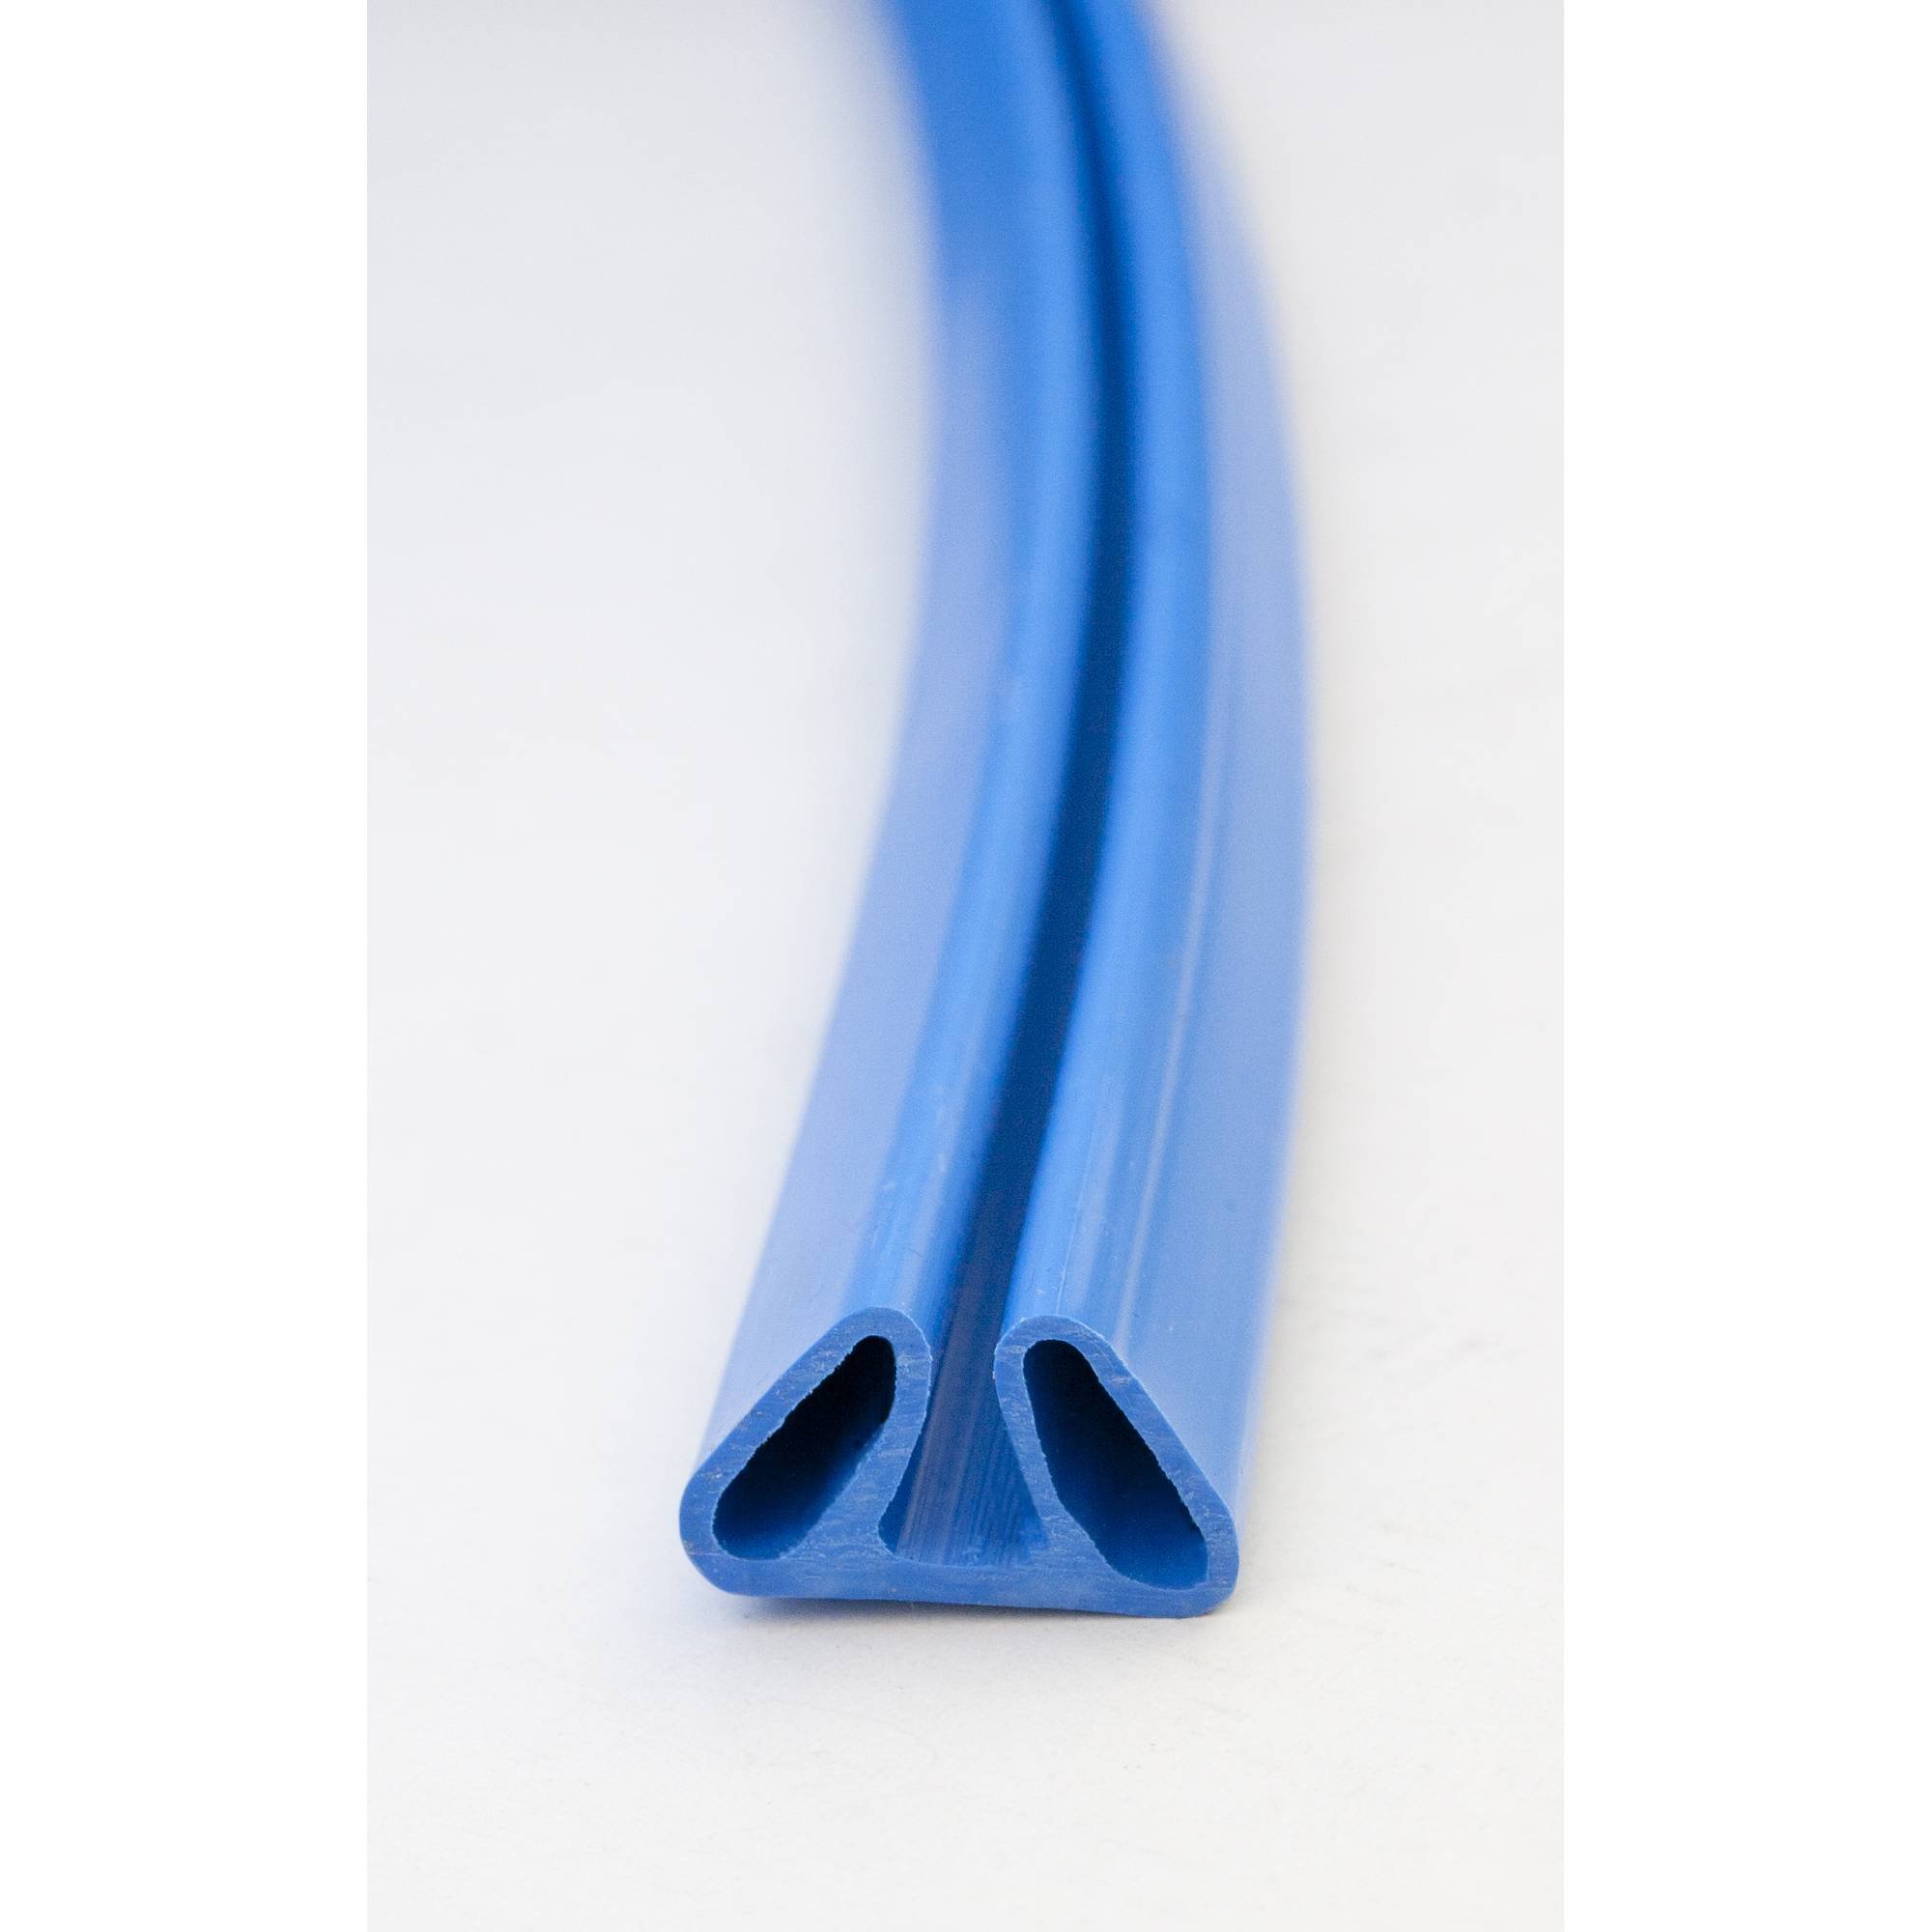 Stahlwandpool achtform Exklusiv 525x320x120 cm, Stahl 0,6 mm weiß, Folie 0,6 mm blau, Einhängebiese